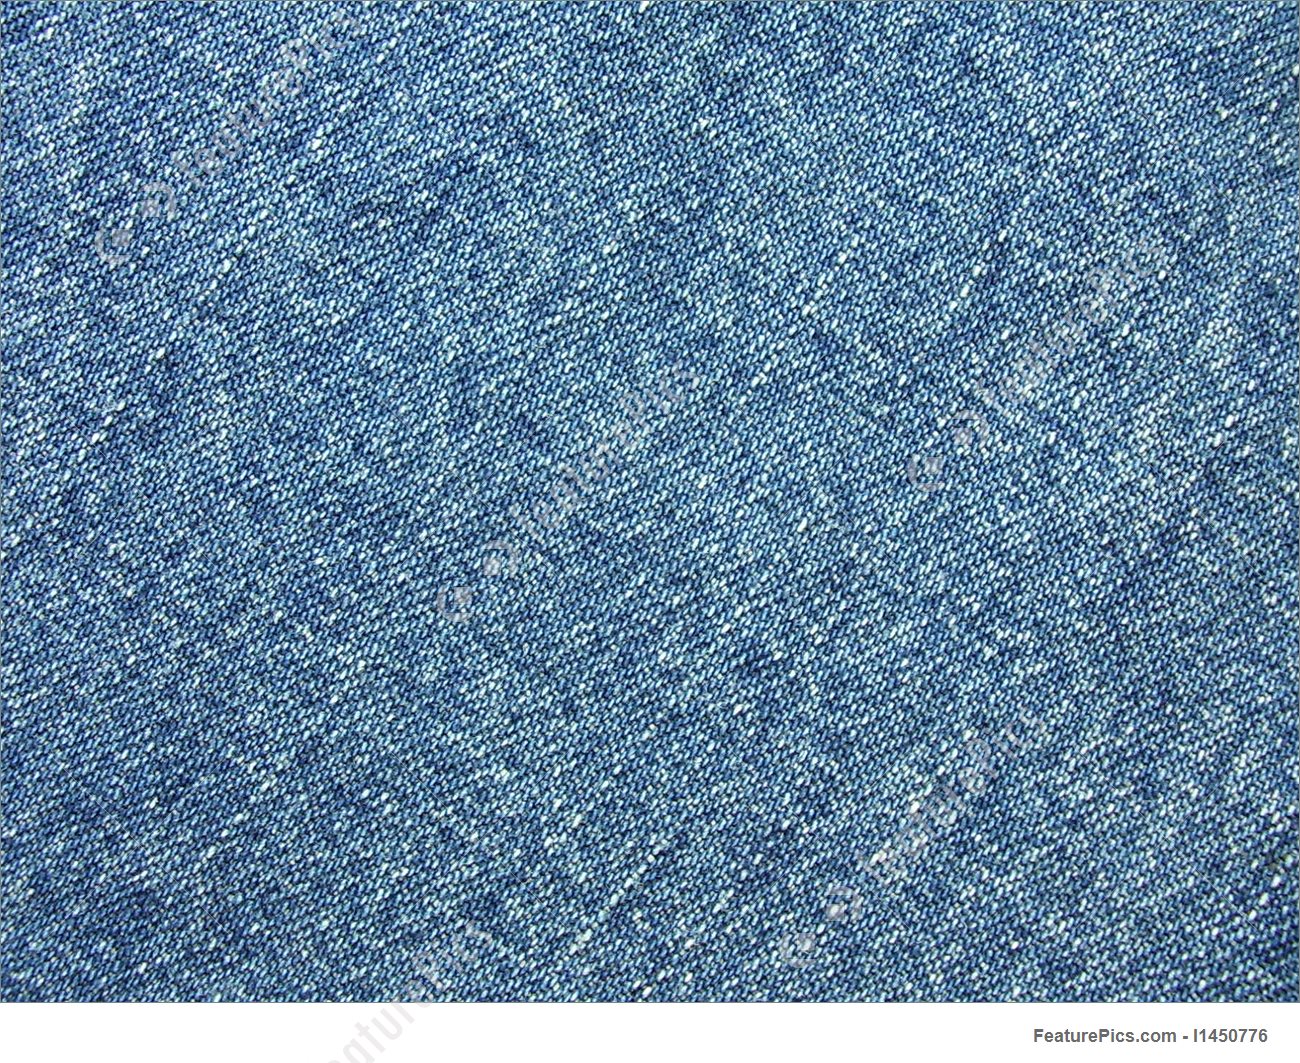 Textile Background, Denim Fabric Textures - Woven Fabric - HD Wallpaper 